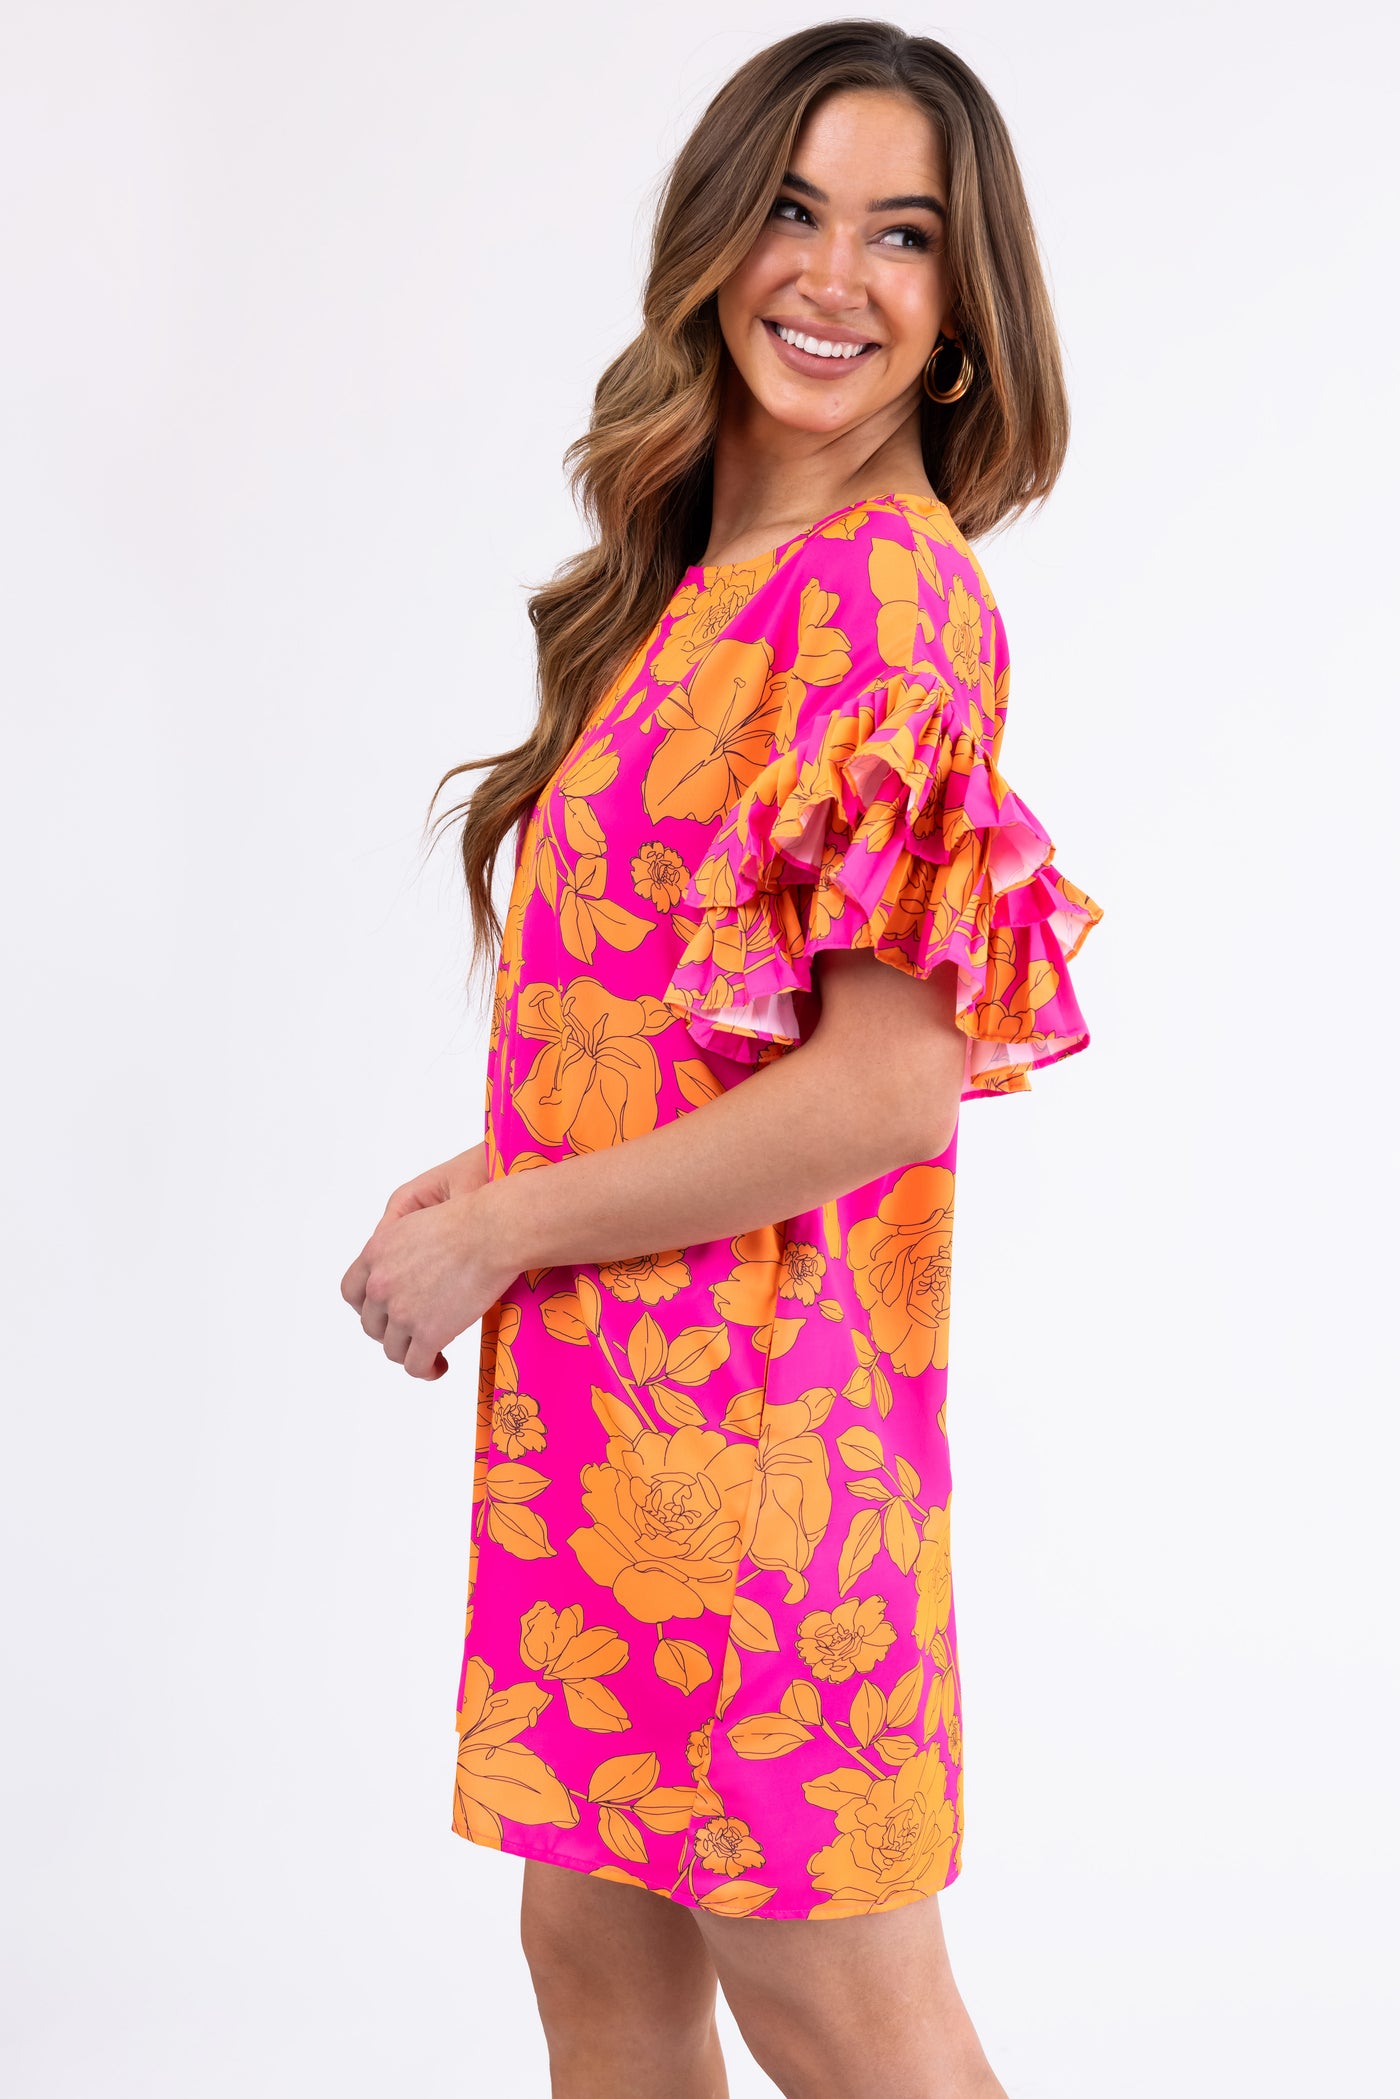 Magenta and Tangerine Floral Print Short Dress